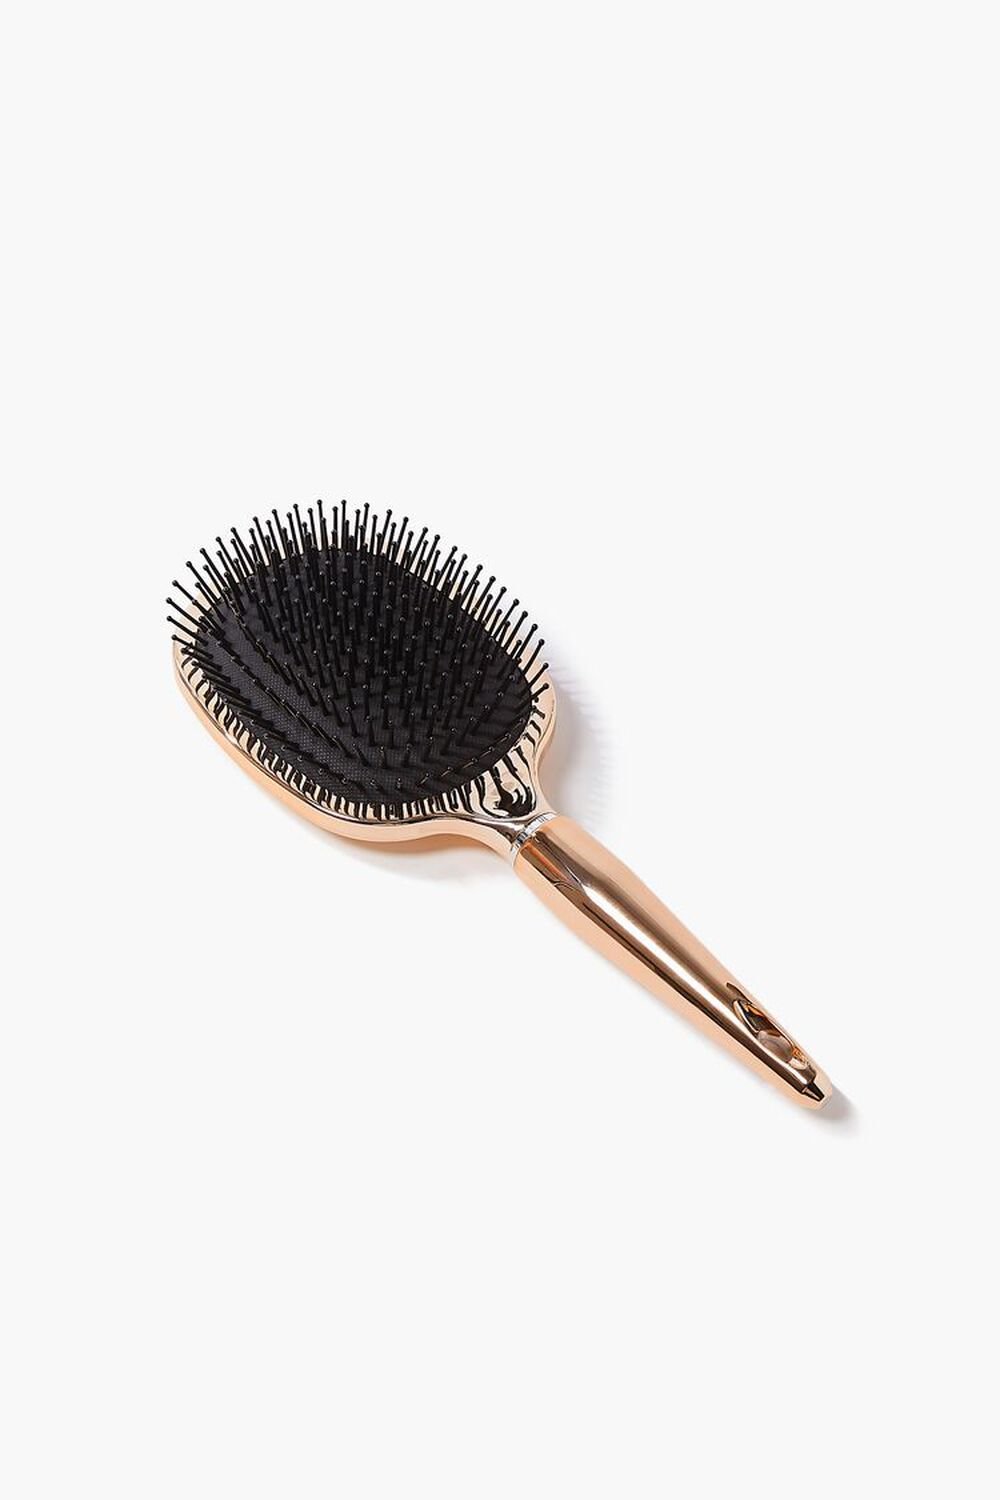 ROSE GOLD Reflective Ball-Tip Hair Brush, image 1